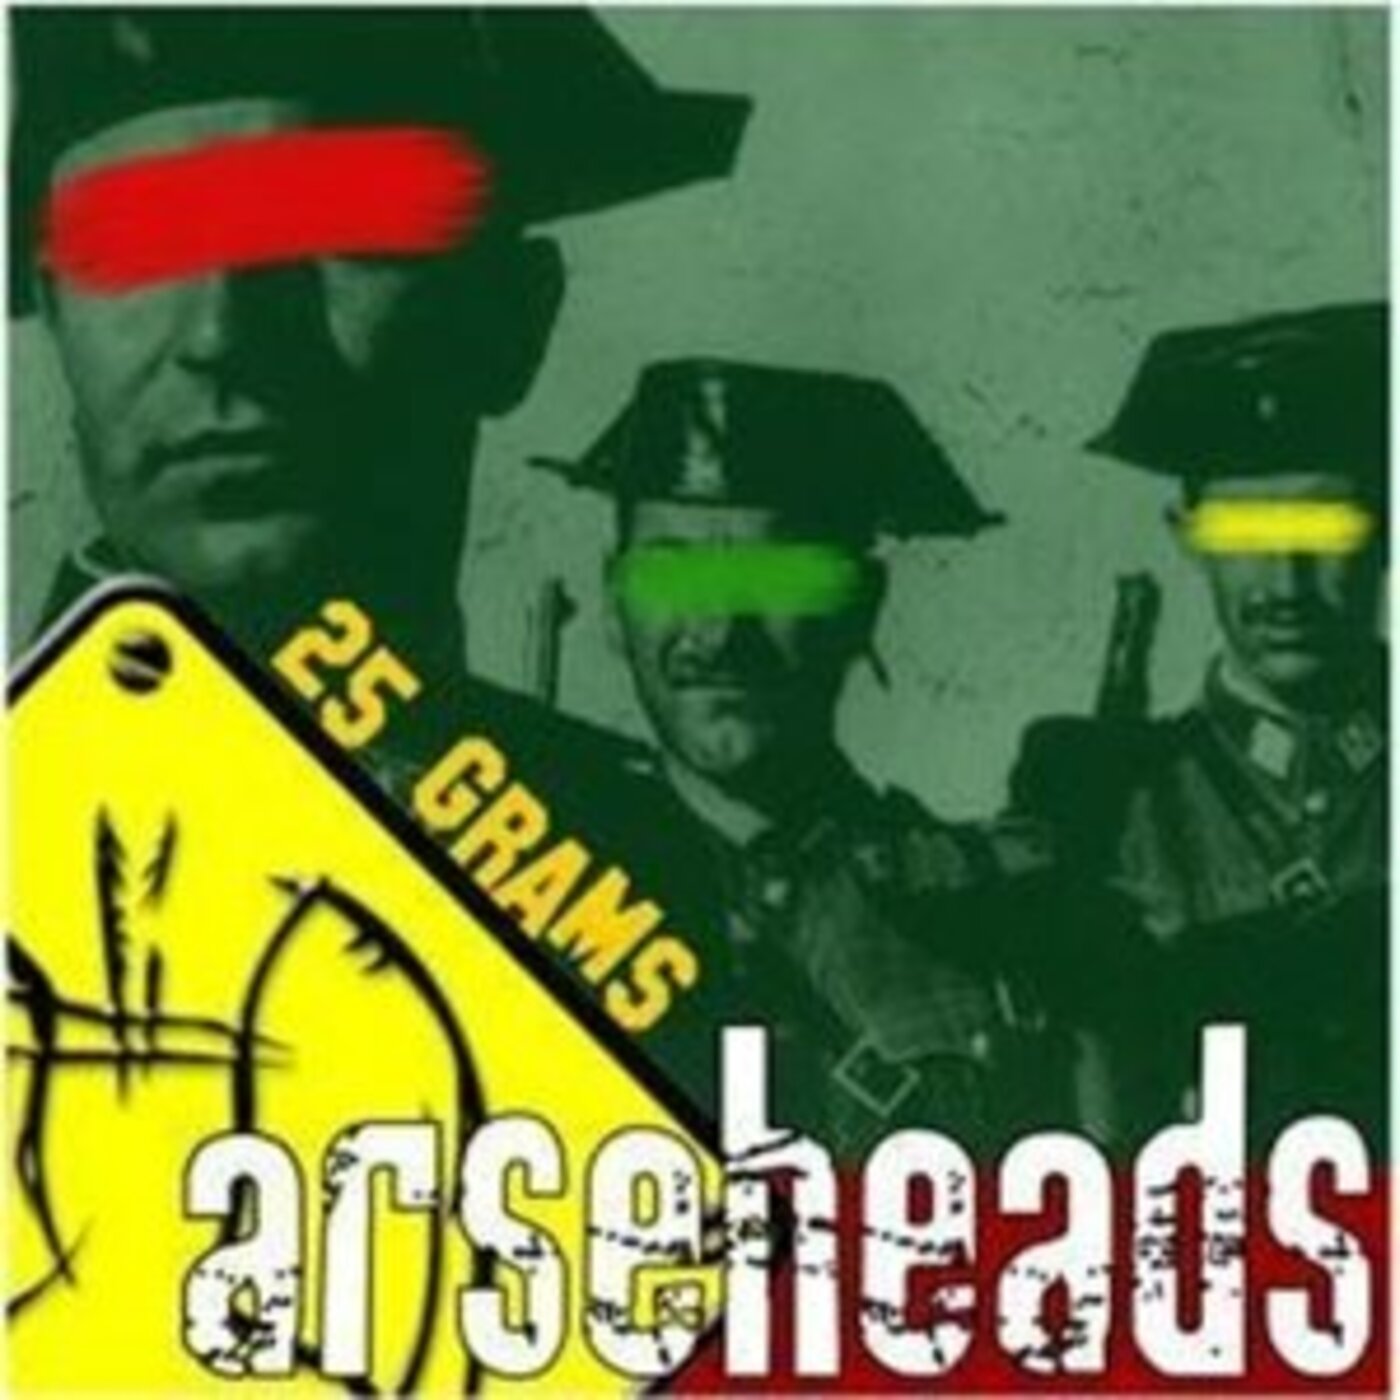 Arseheads - 25 Grams | musica en valencià